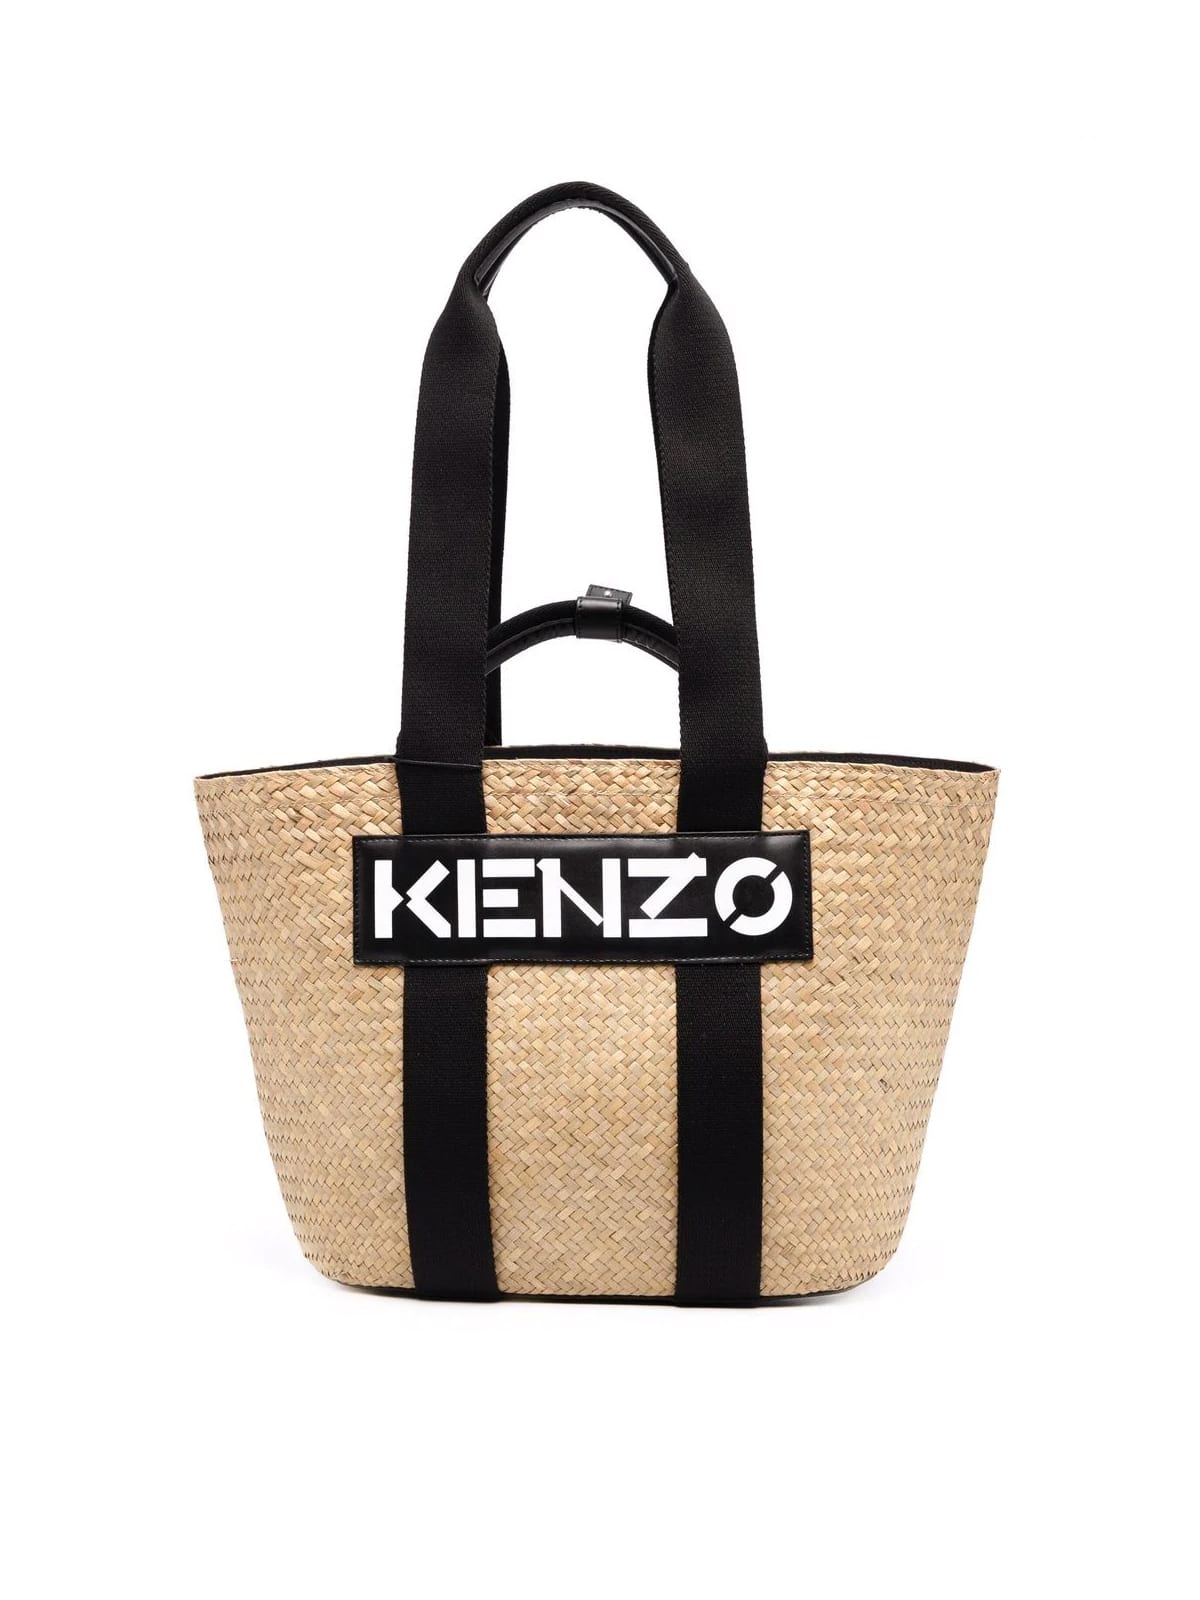 Kenzo Large Basket